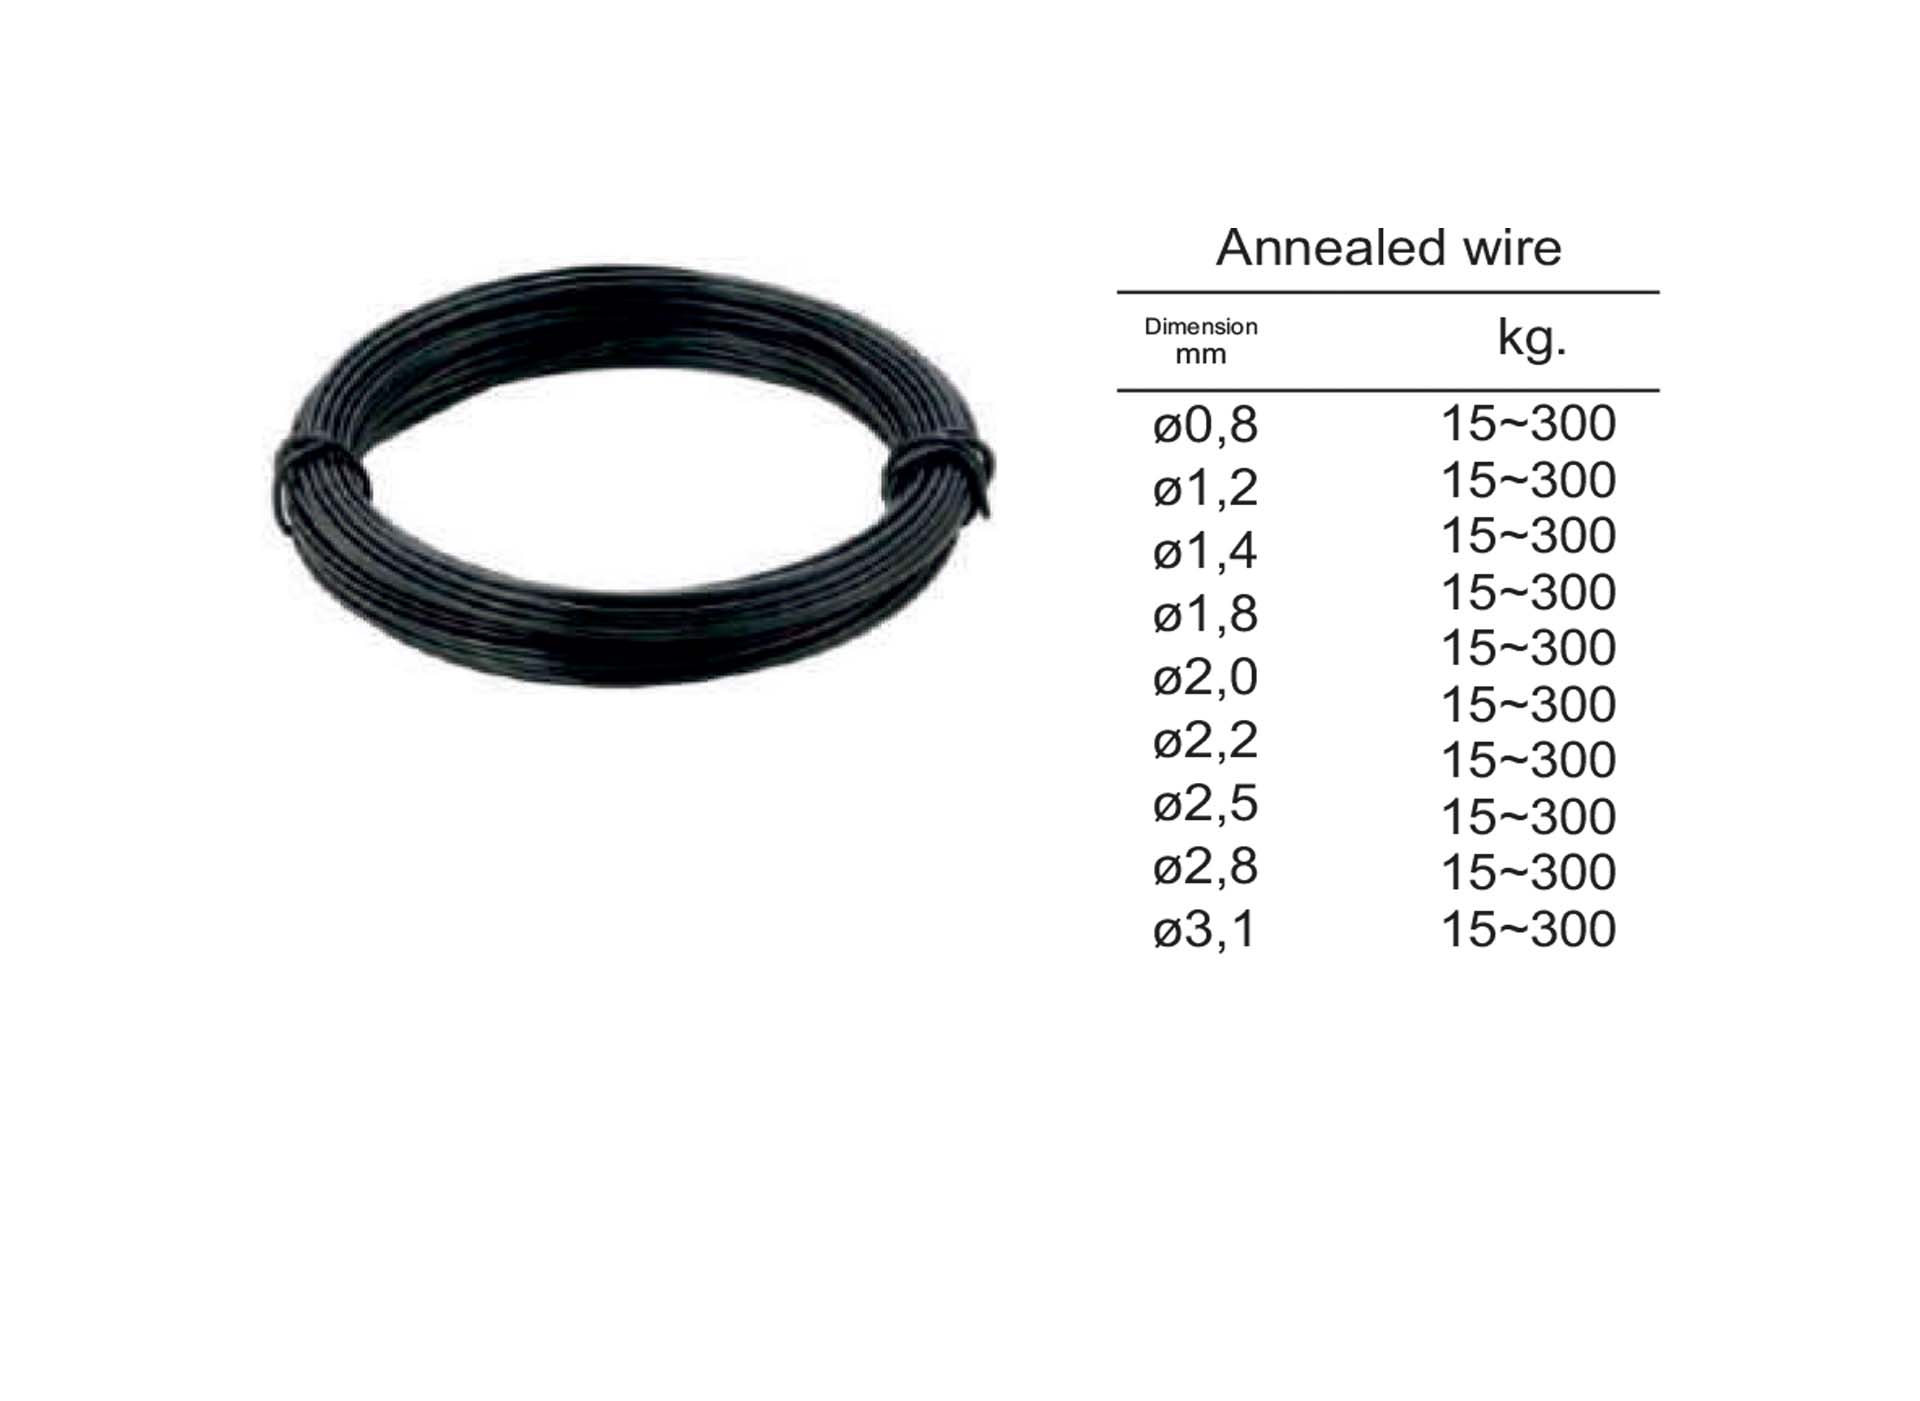 Annealed wire